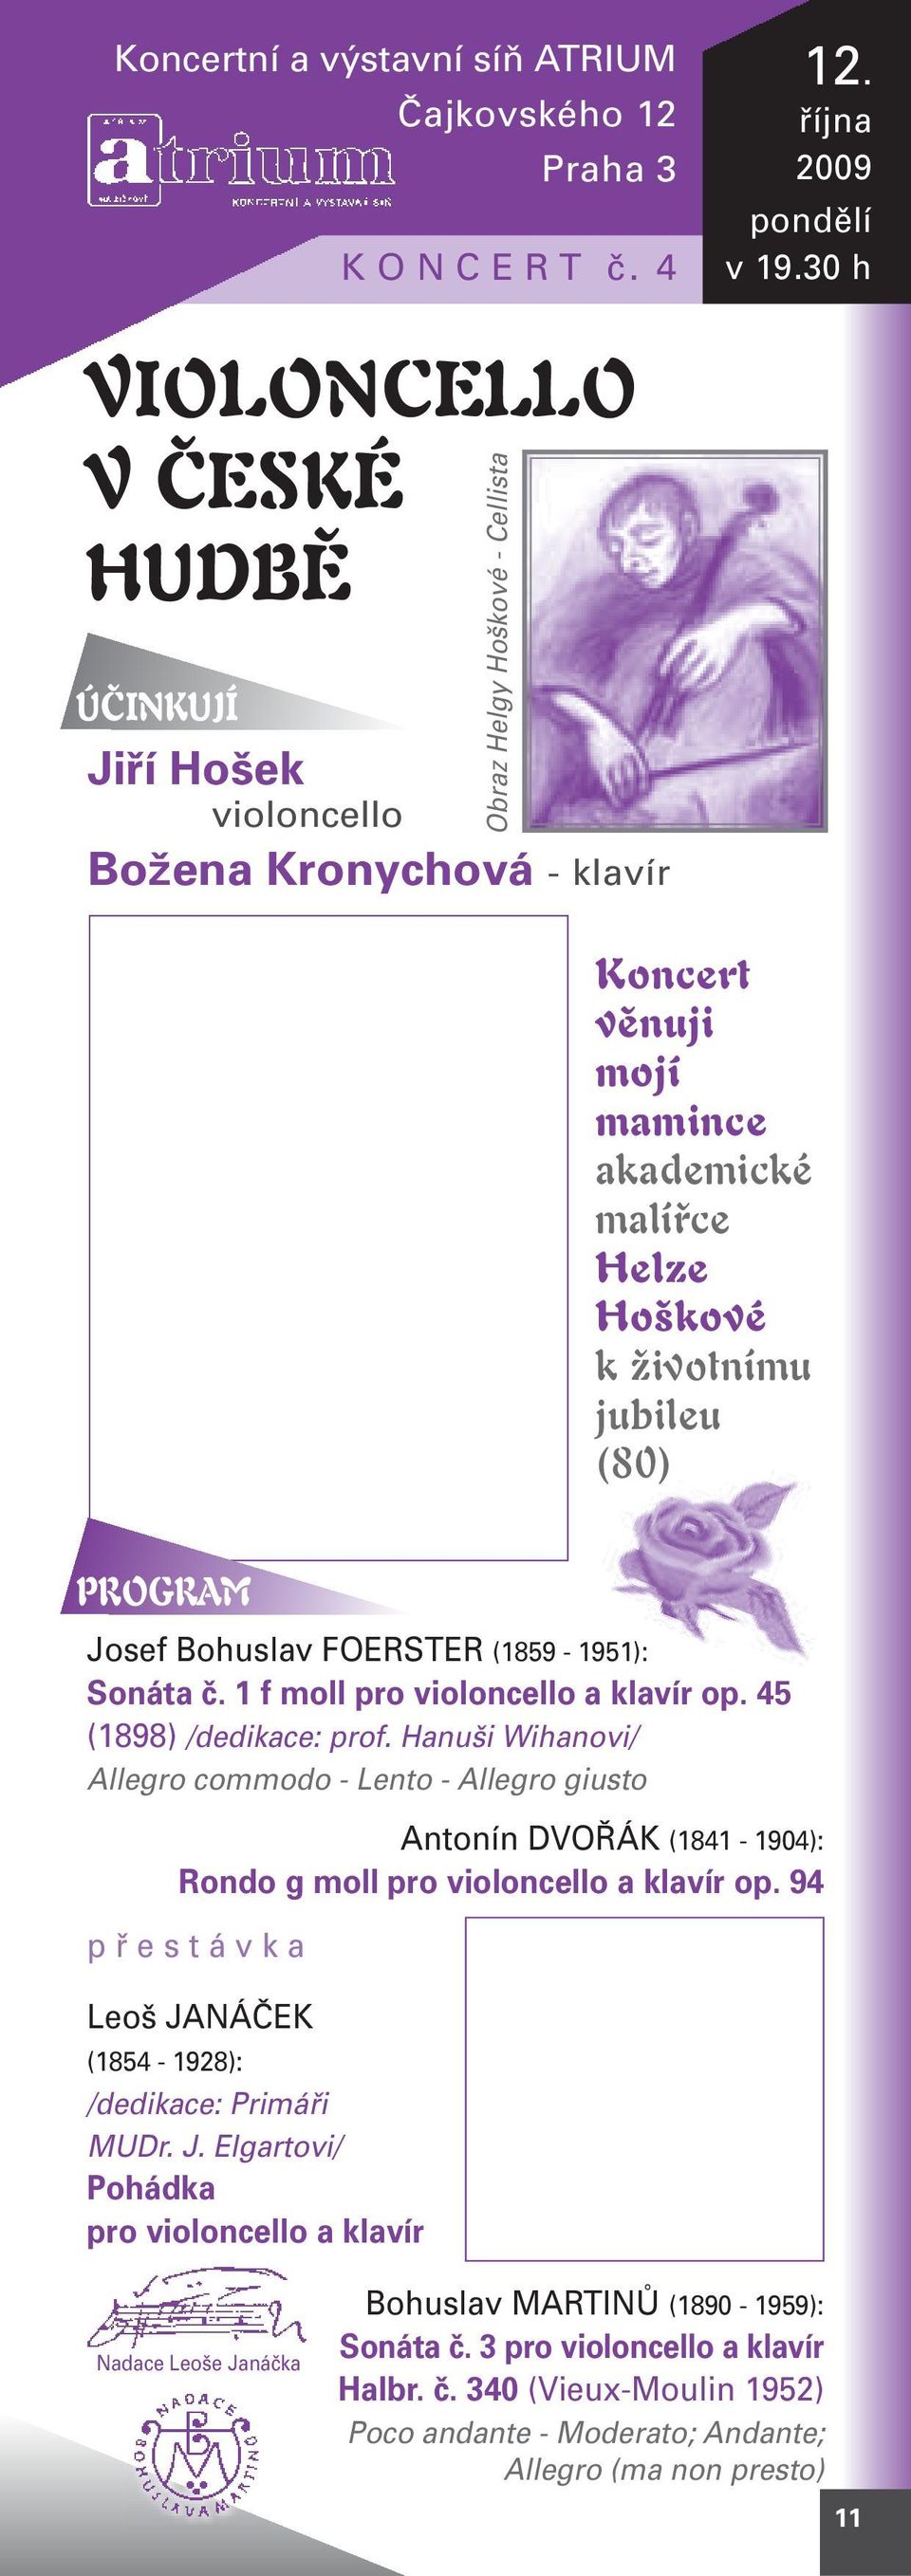 jubileu (80) PROGRAM Josef Bohuslav FOERSTER (1859-1951): Sonáta č. 1 f moll pro violoncello a klavír op. 45 (1898) /dedikace: prof.